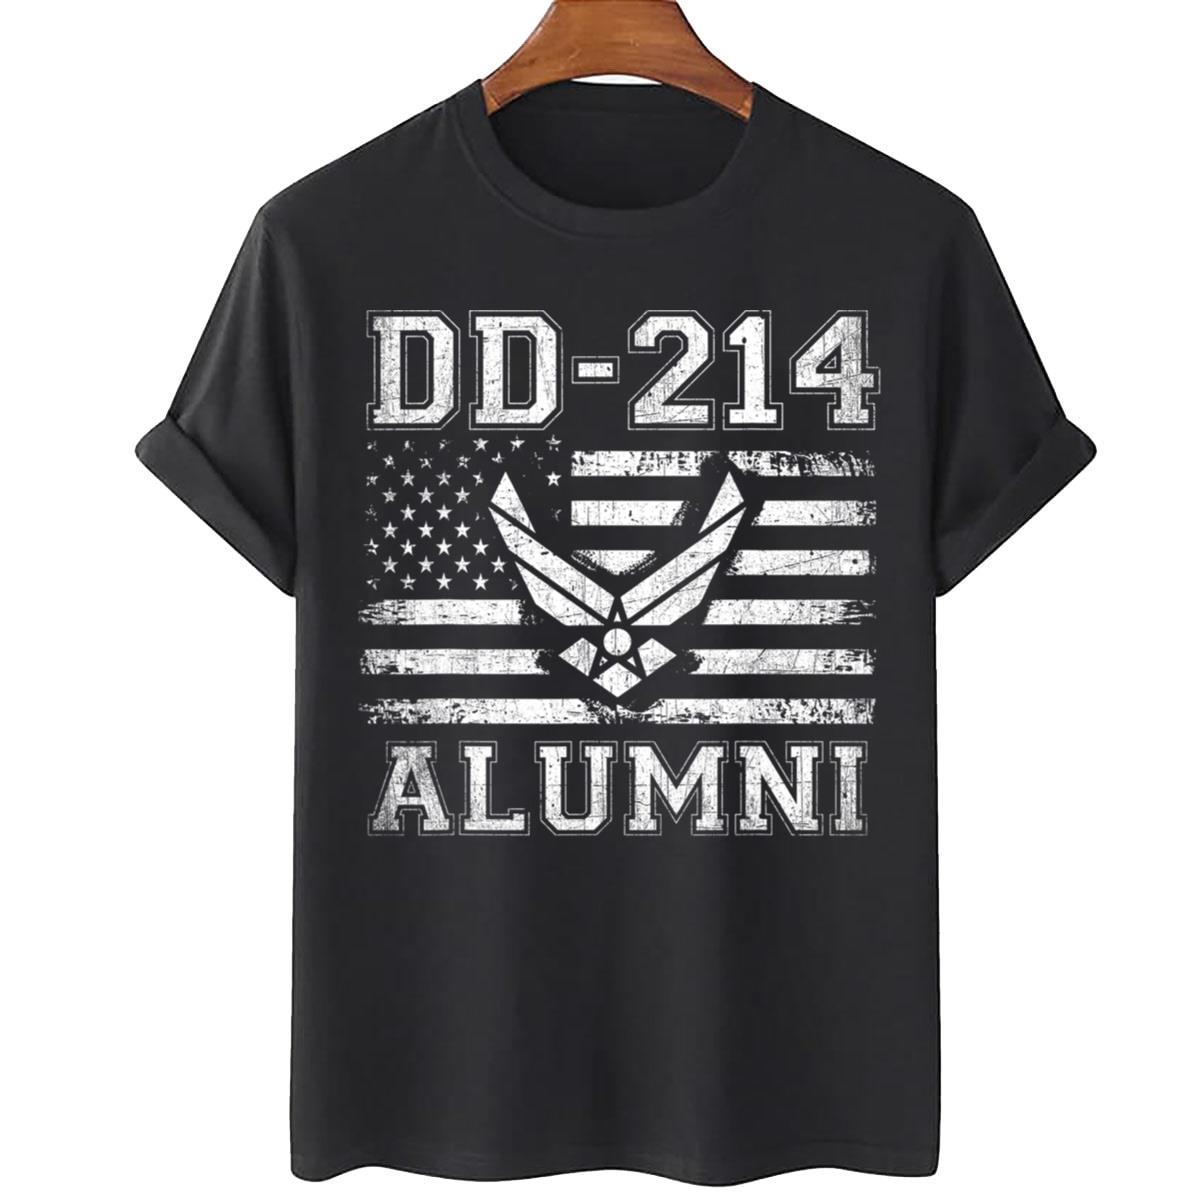 DD-214 US Air Force Alumni Military Veteran T-Shirt